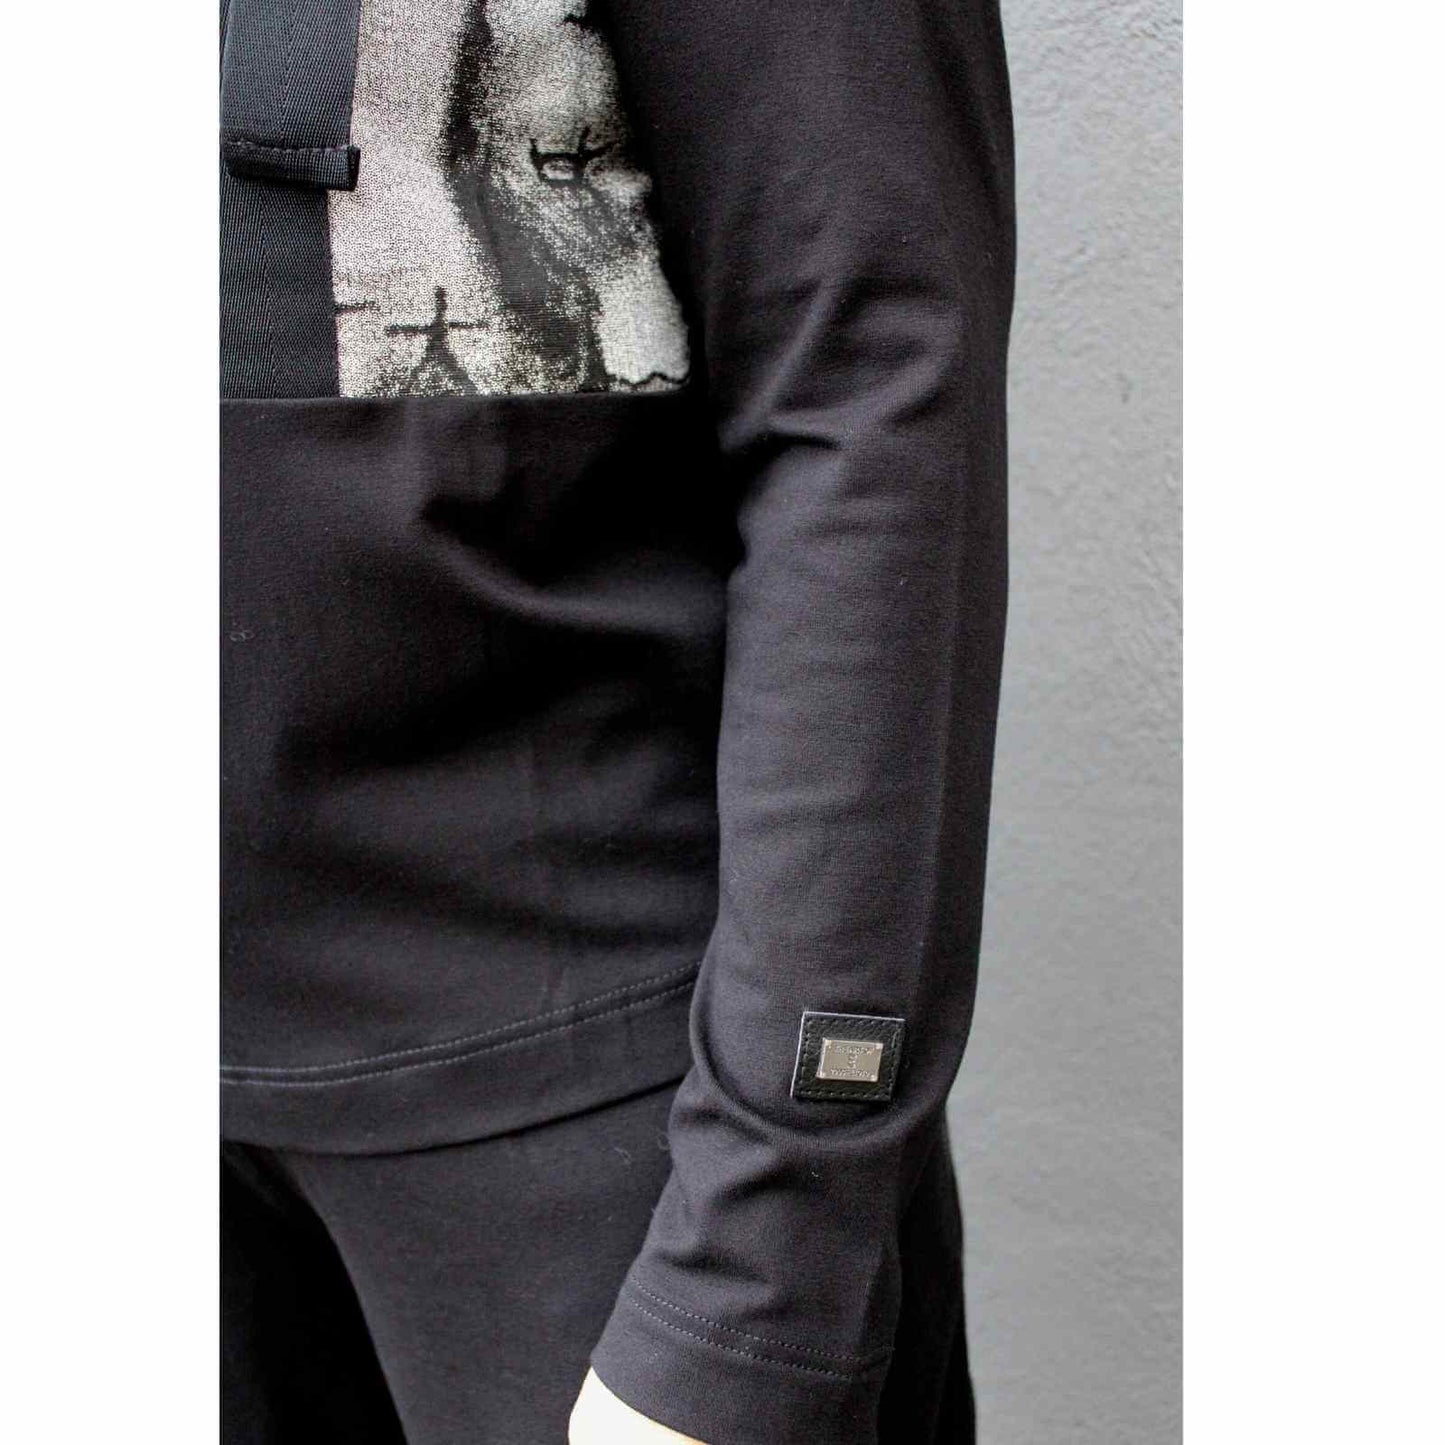 Ærme detalje på sort bluse med rem fra E-Avantgarde